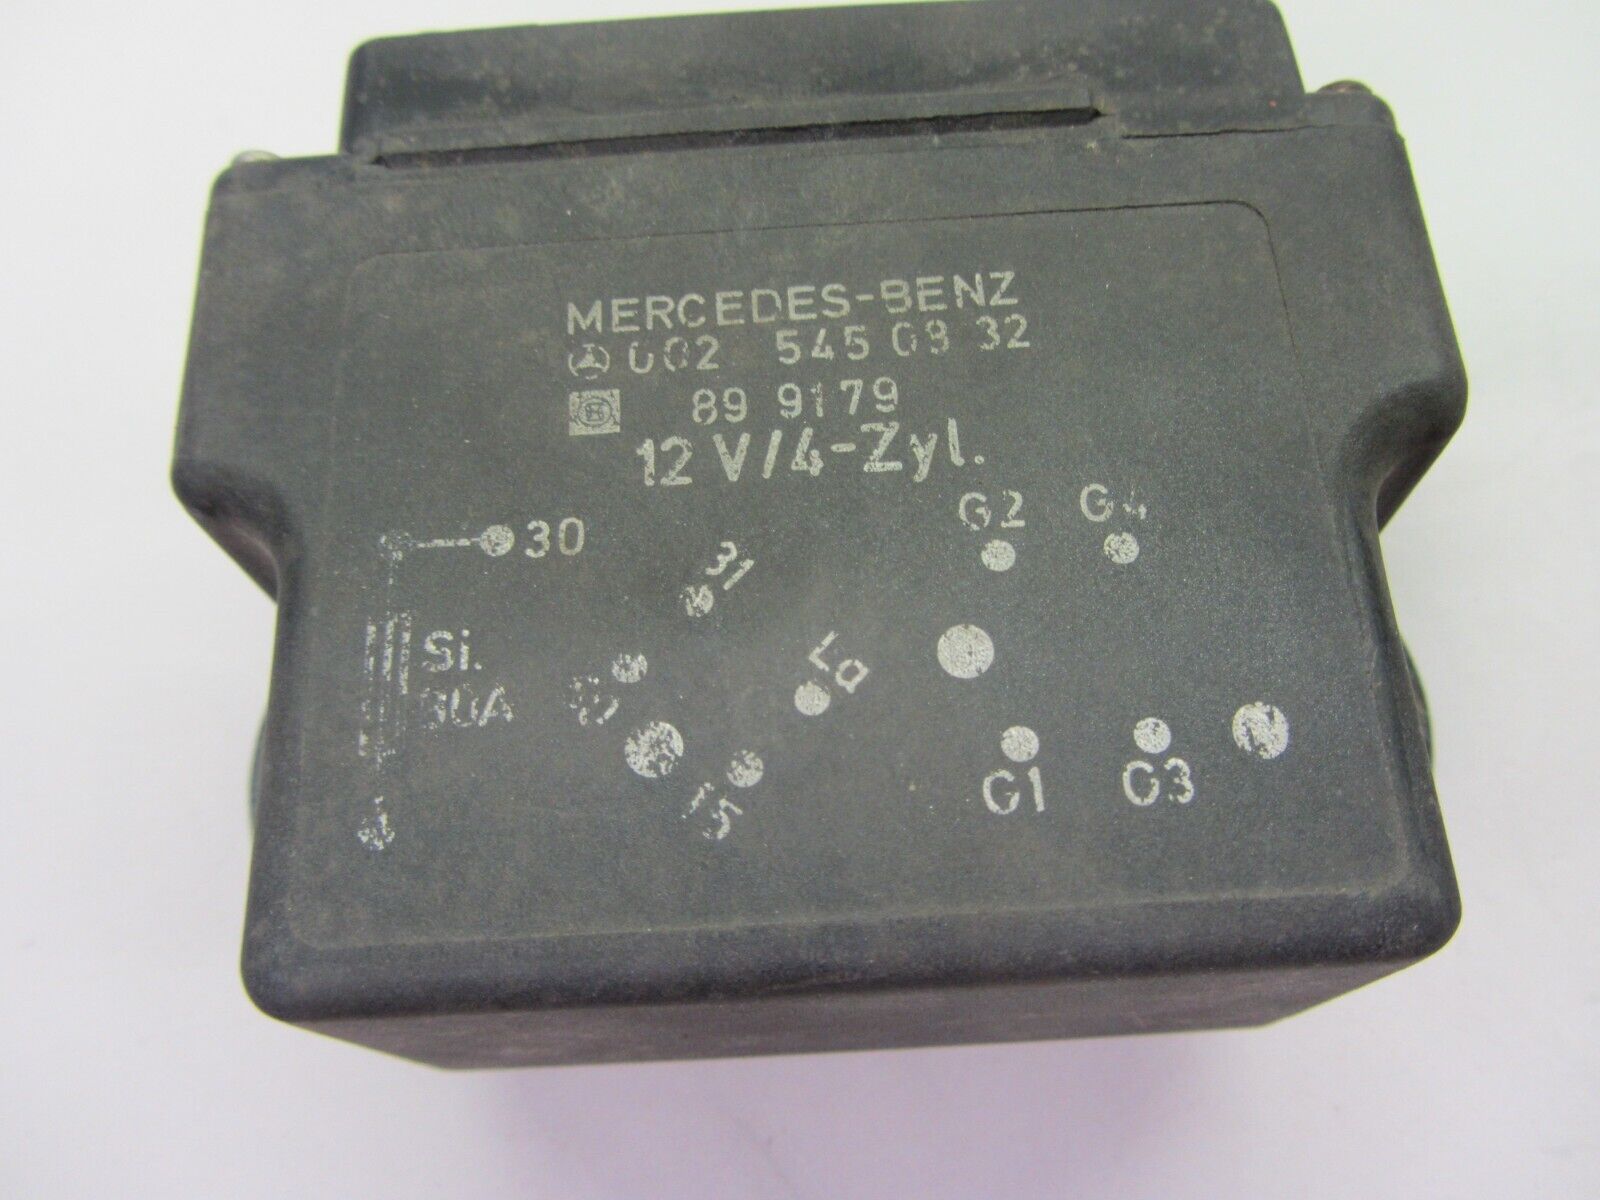 Vintage Mercedes Glow Plug Relay 4 Cylinder, 002 545 09 32